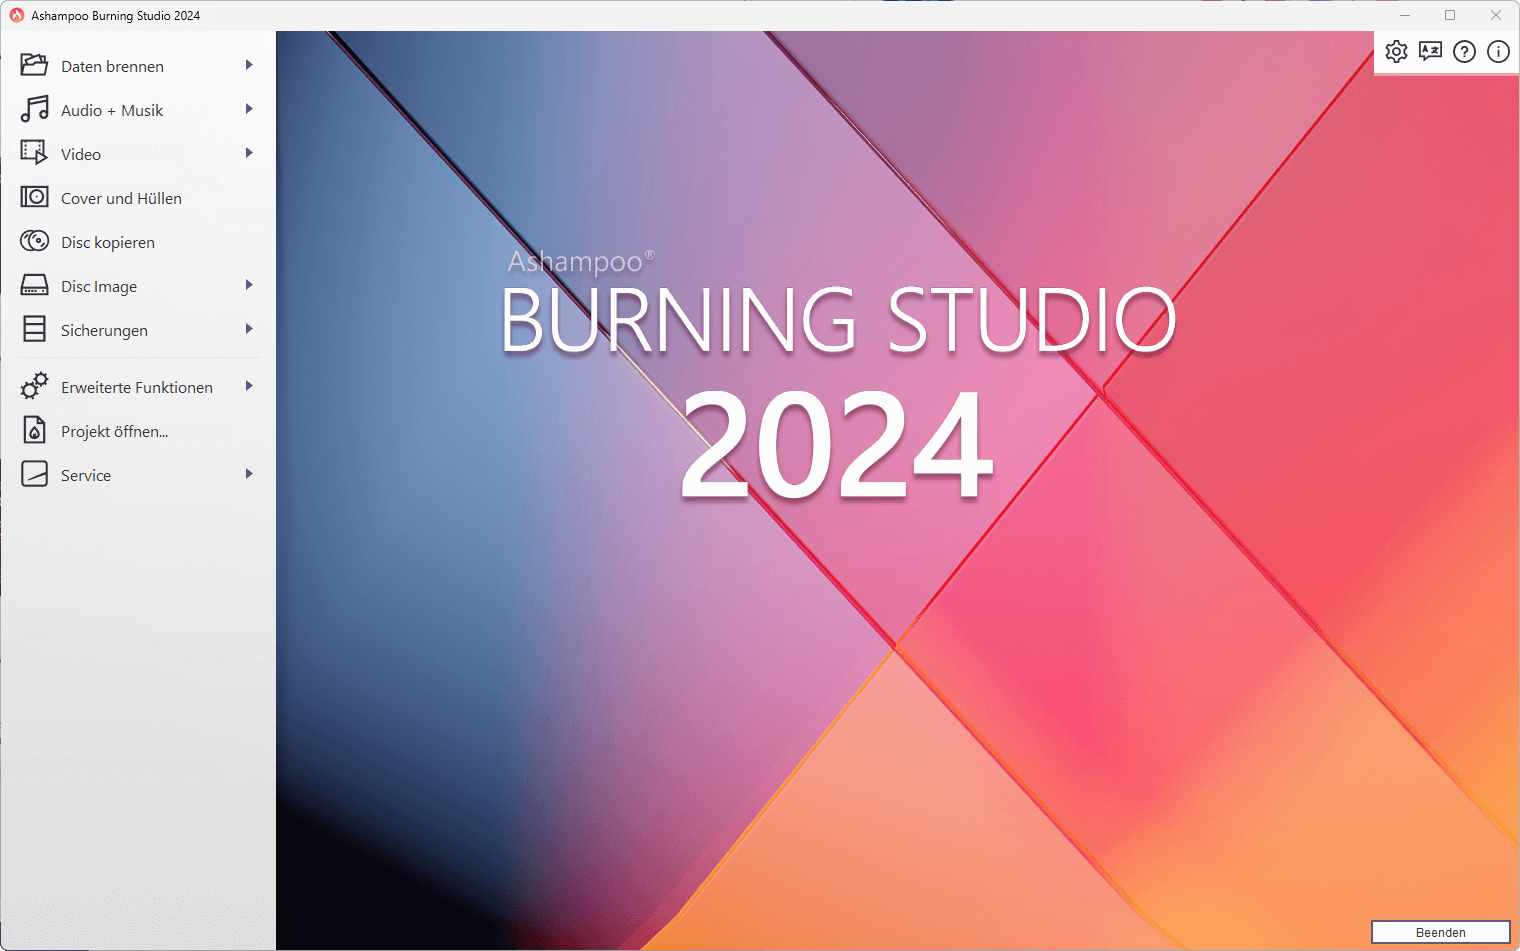 Ashampoo Burning Studio 2024 - Startseite